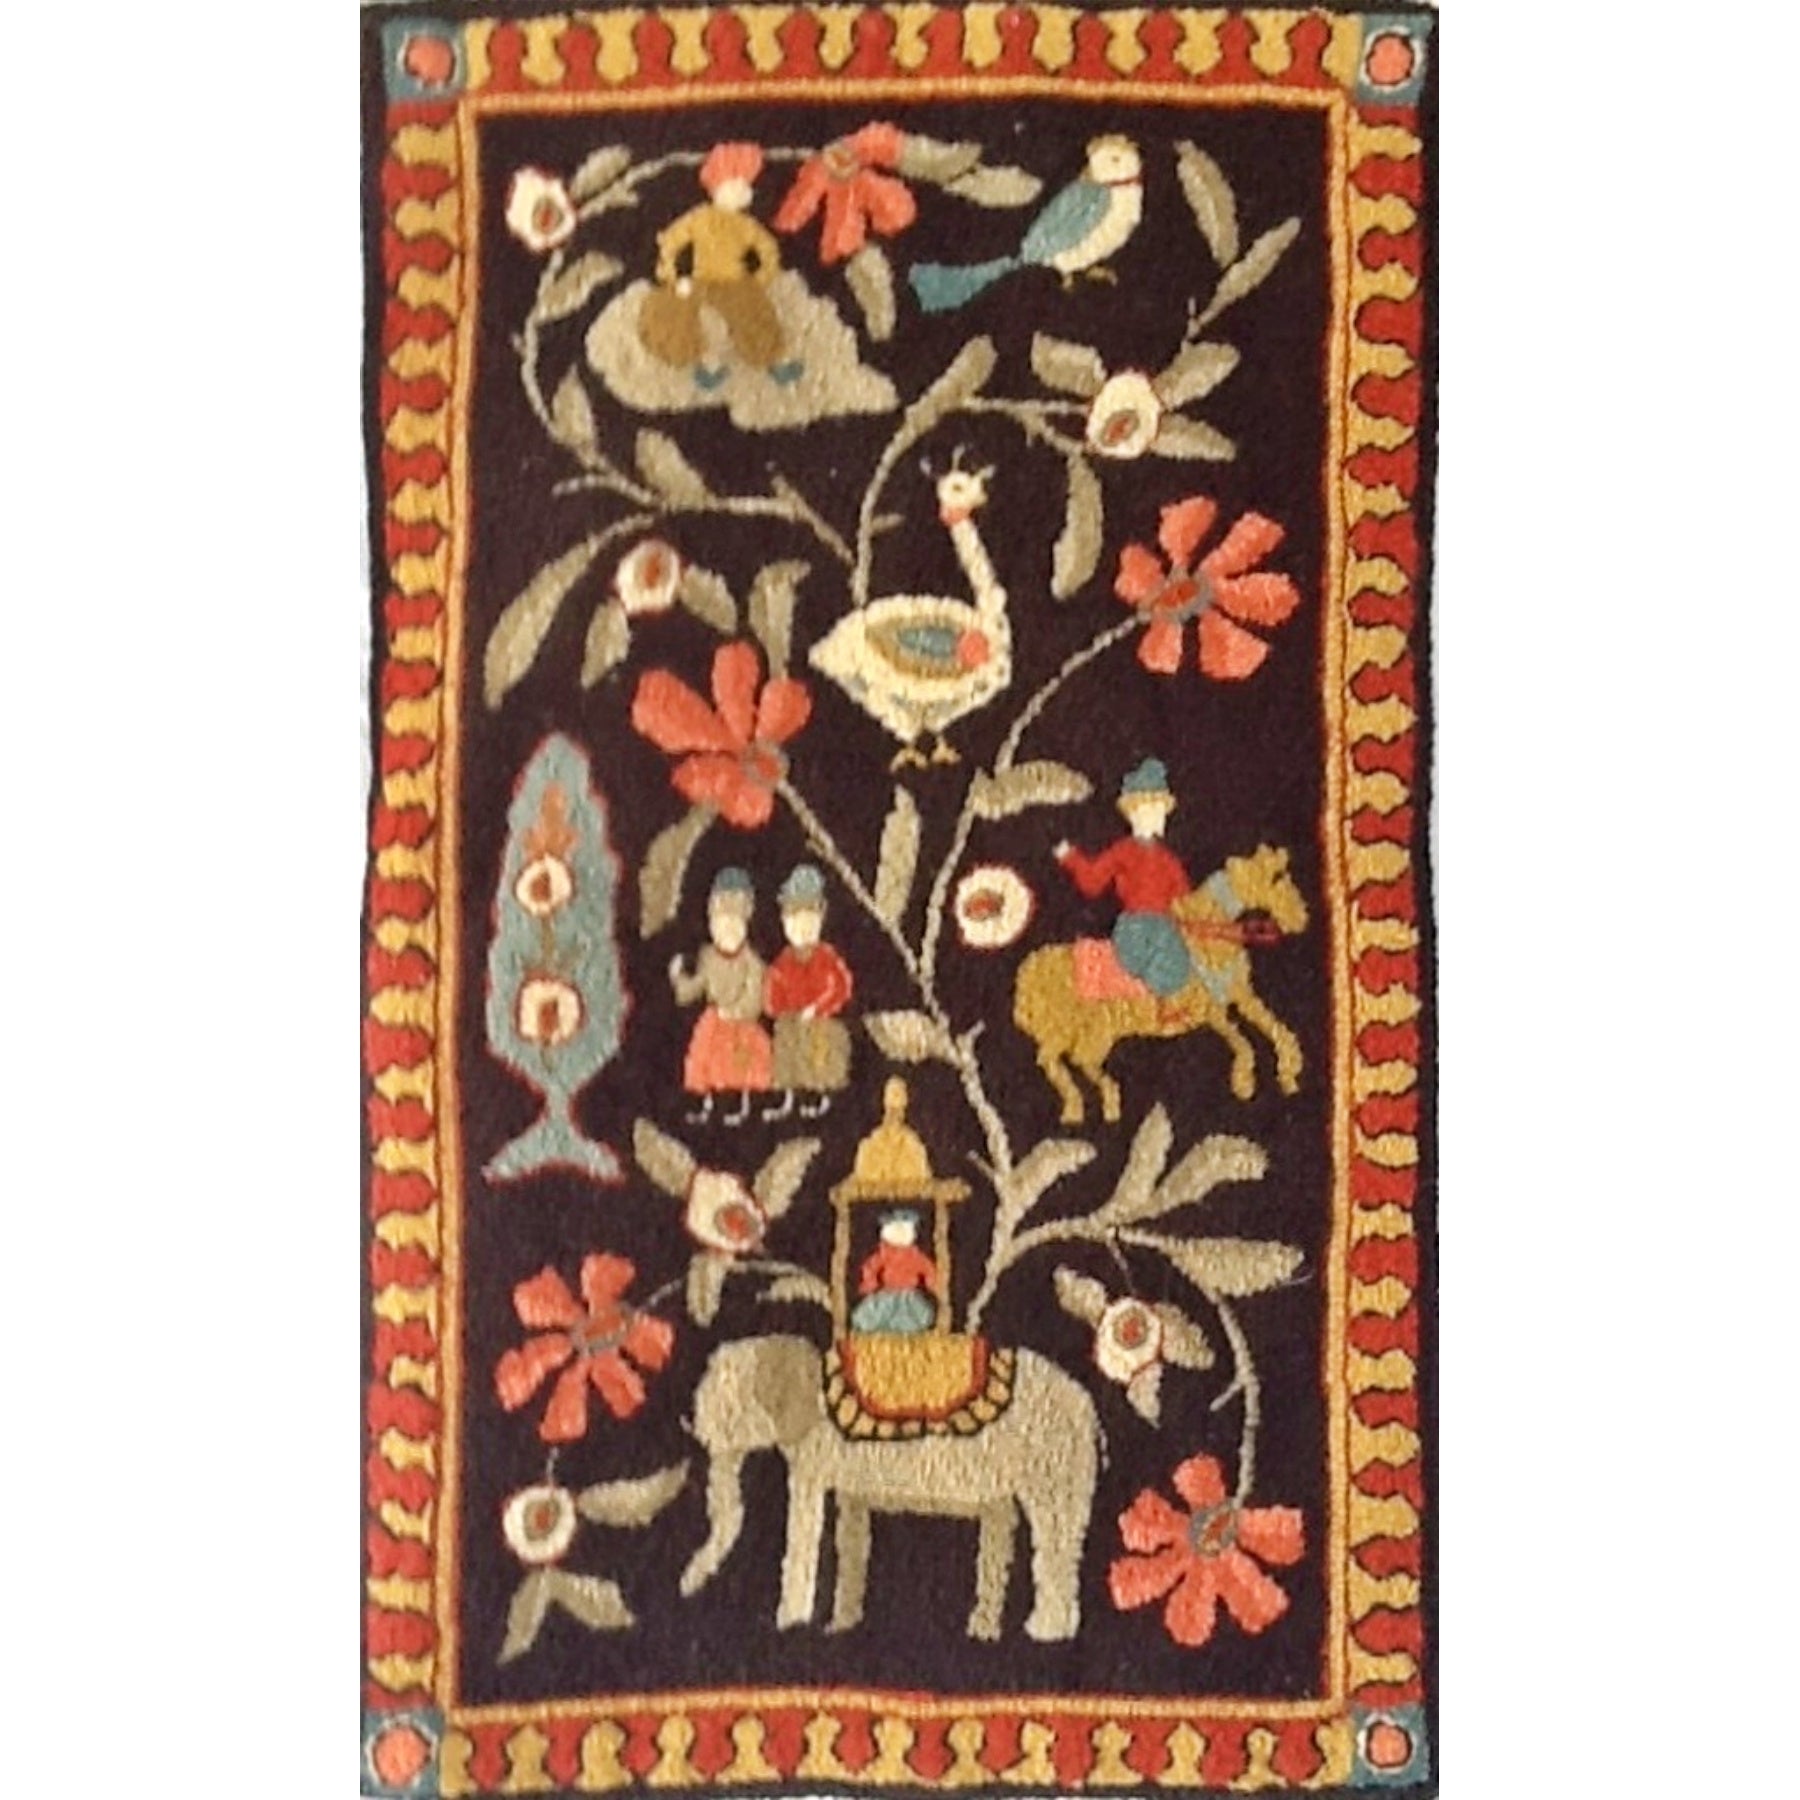 Mini-Kashani, rug hooked by Dorothy Brown